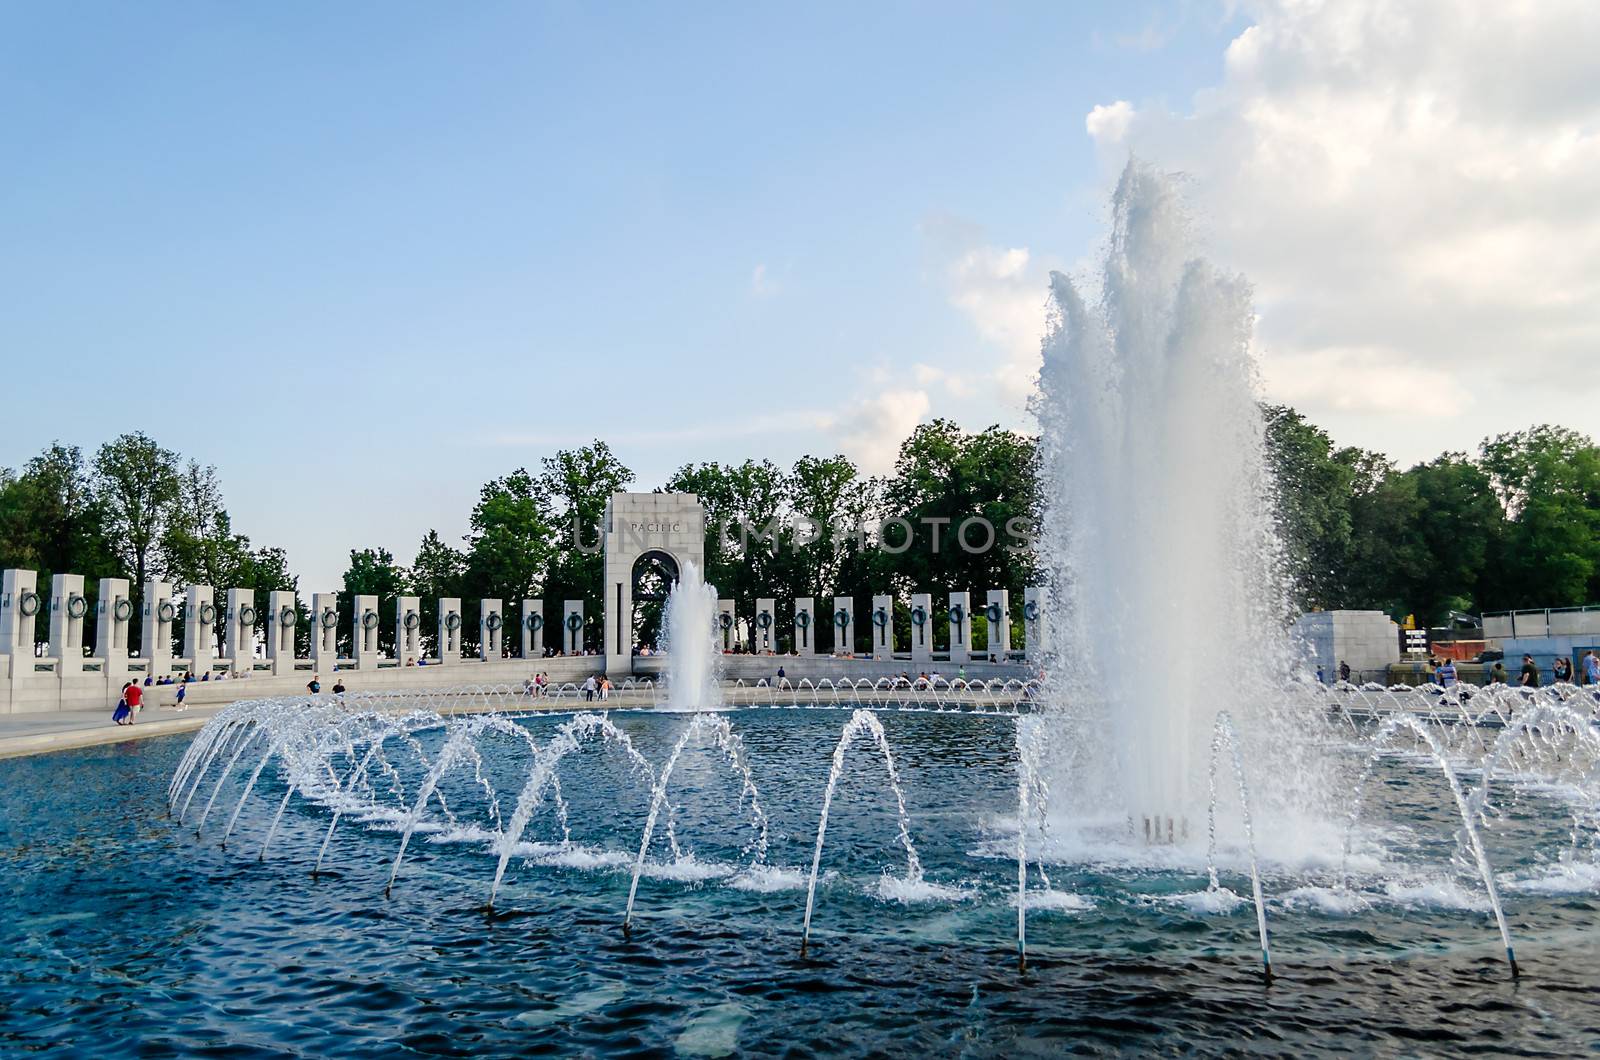 World War II Memorial in Washington DC by marcorubino